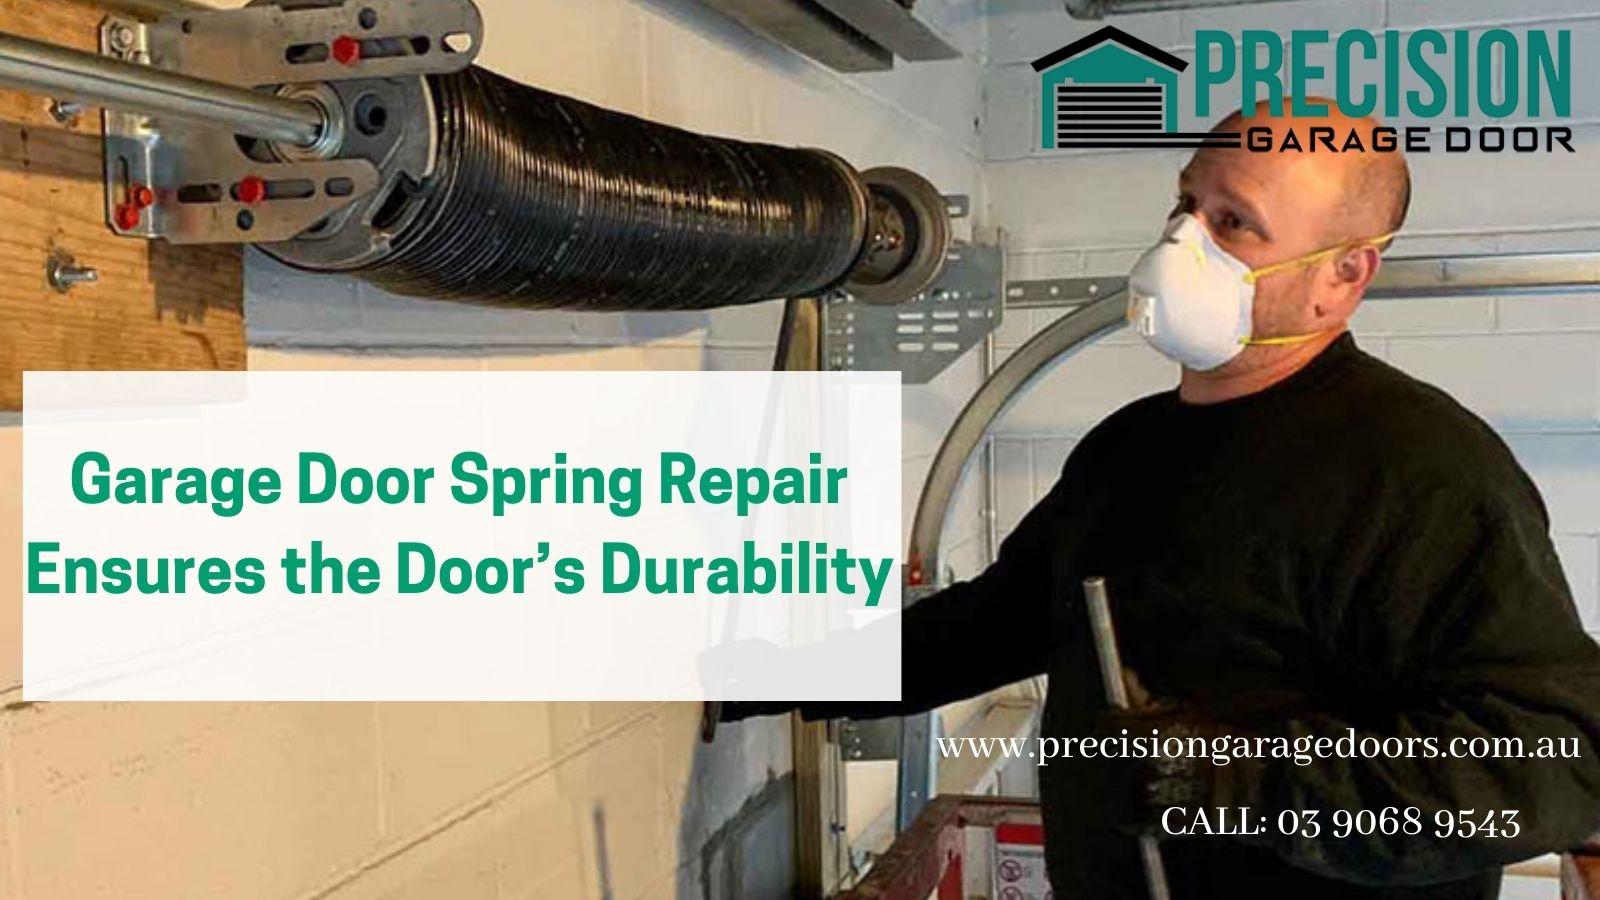 How to Repair Your Garage Door Springs: Tips from Experts